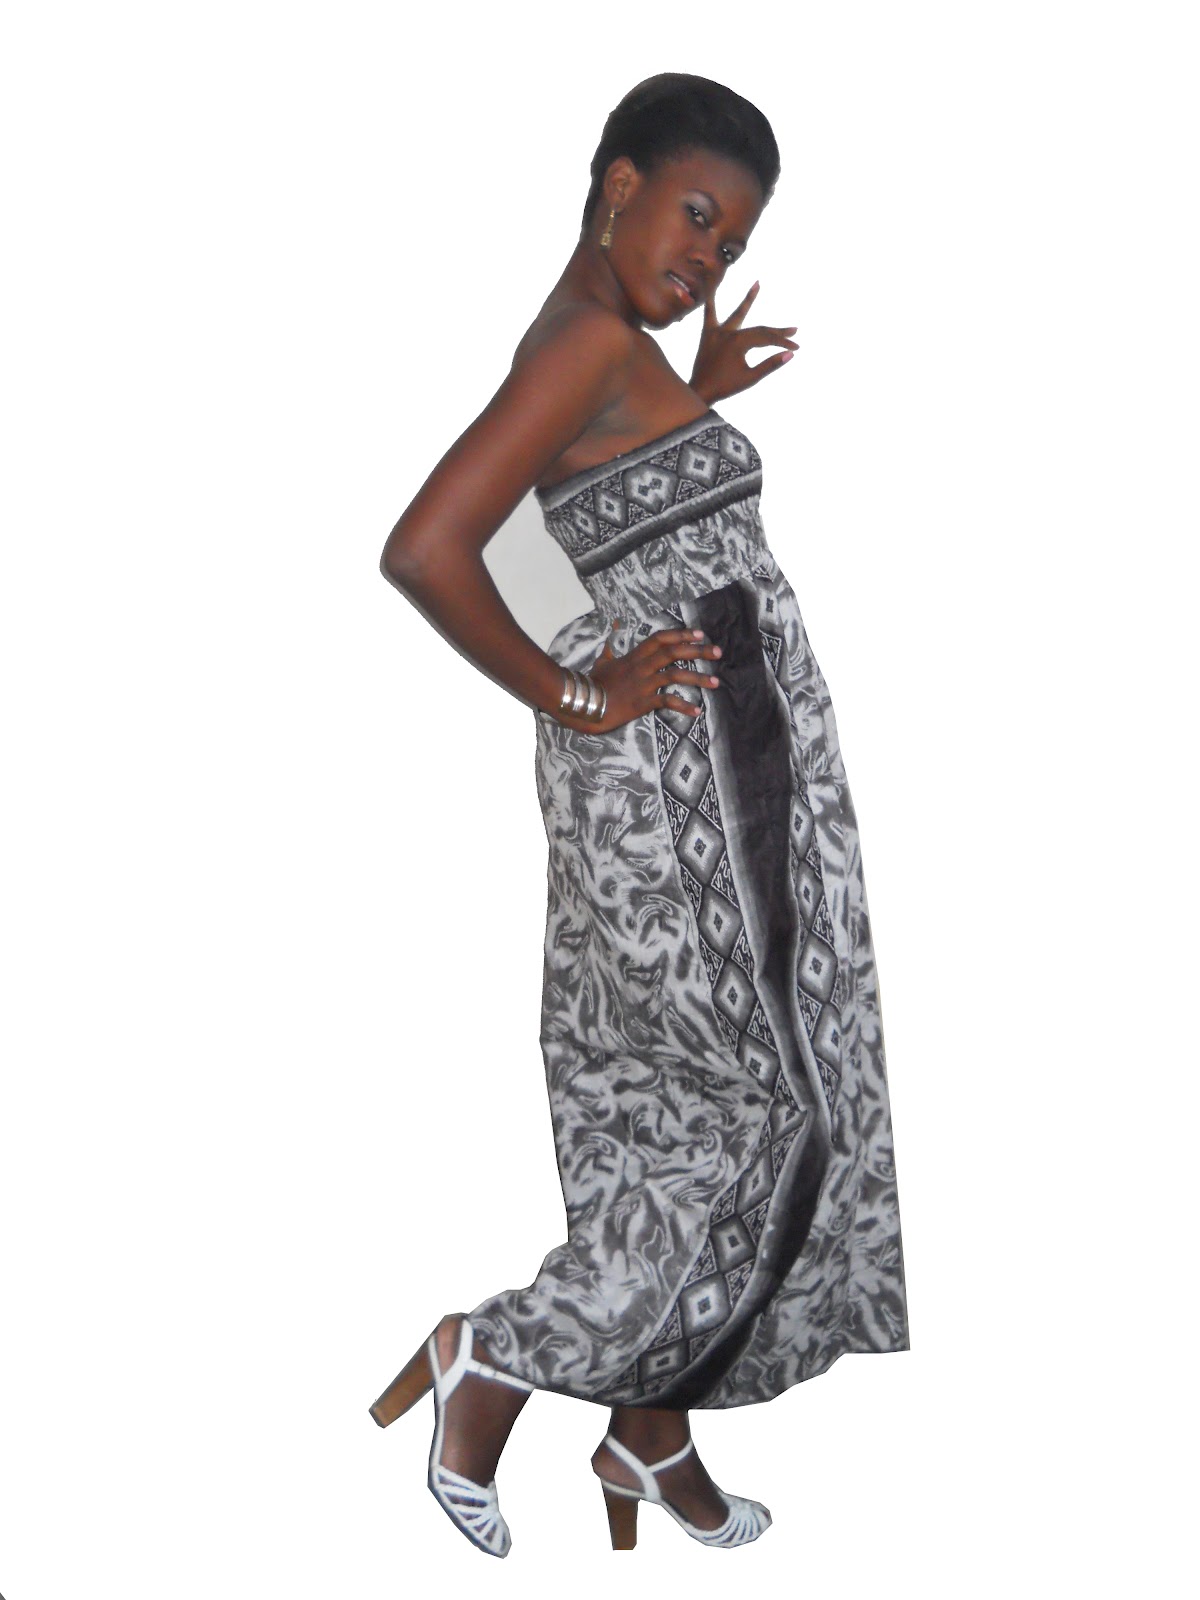 RINEEZ ARTS - African Print Outfits & Culture Stuffs: Sleeveless dress